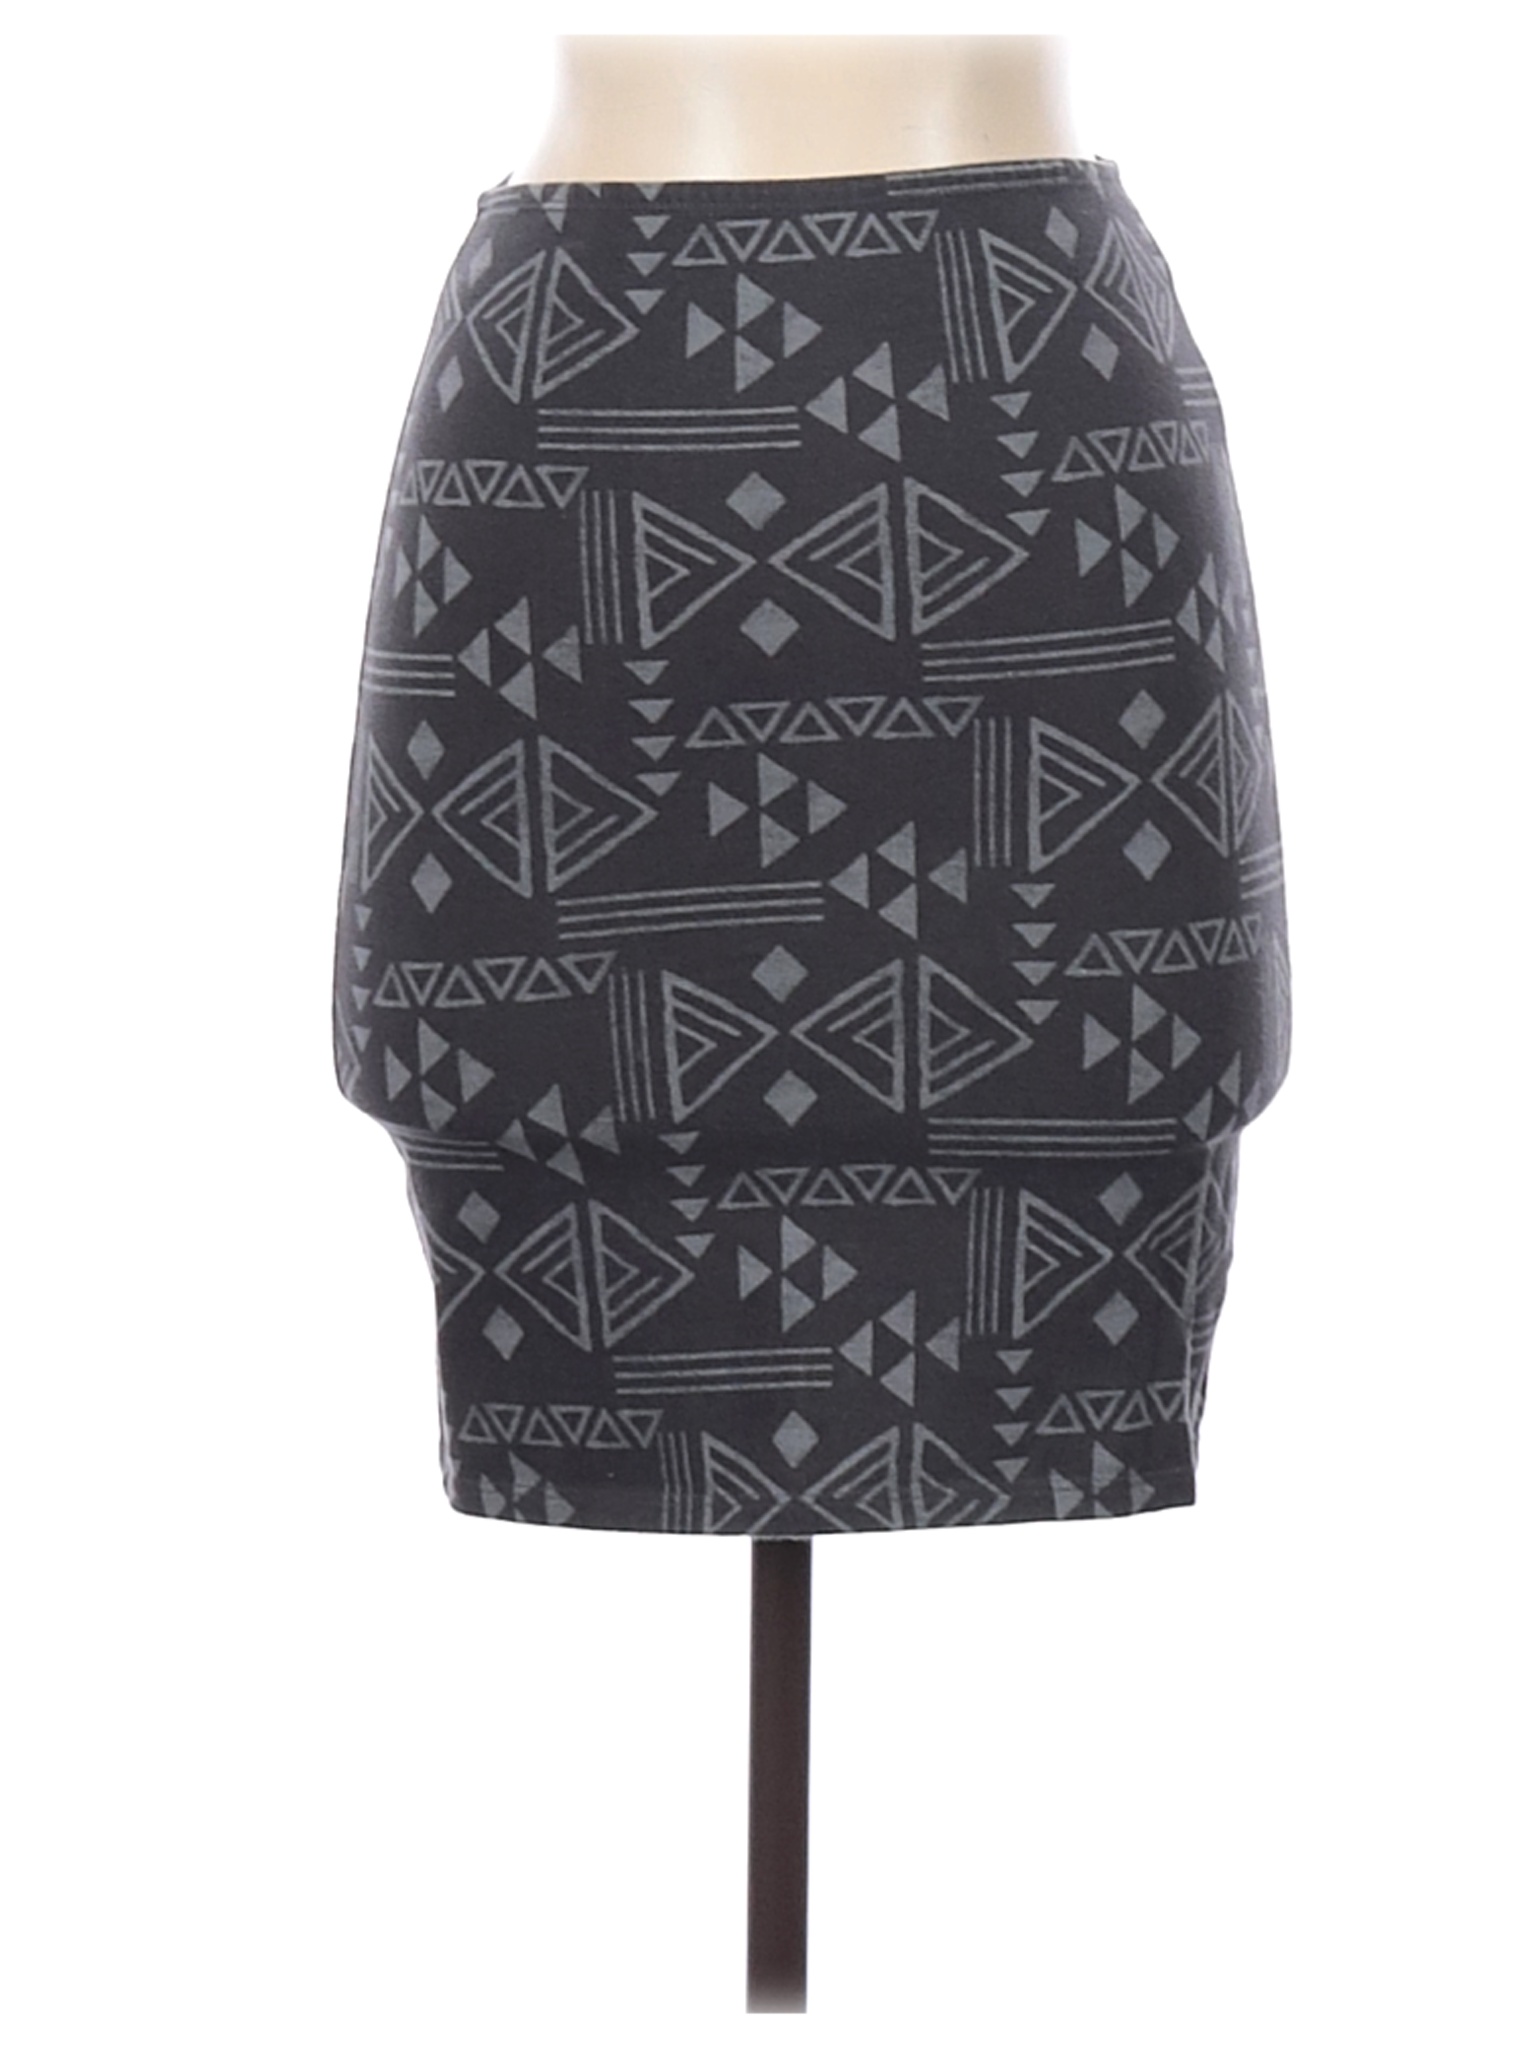 Abercrombie & Fitch Women Black Casual Skirt XS | eBay